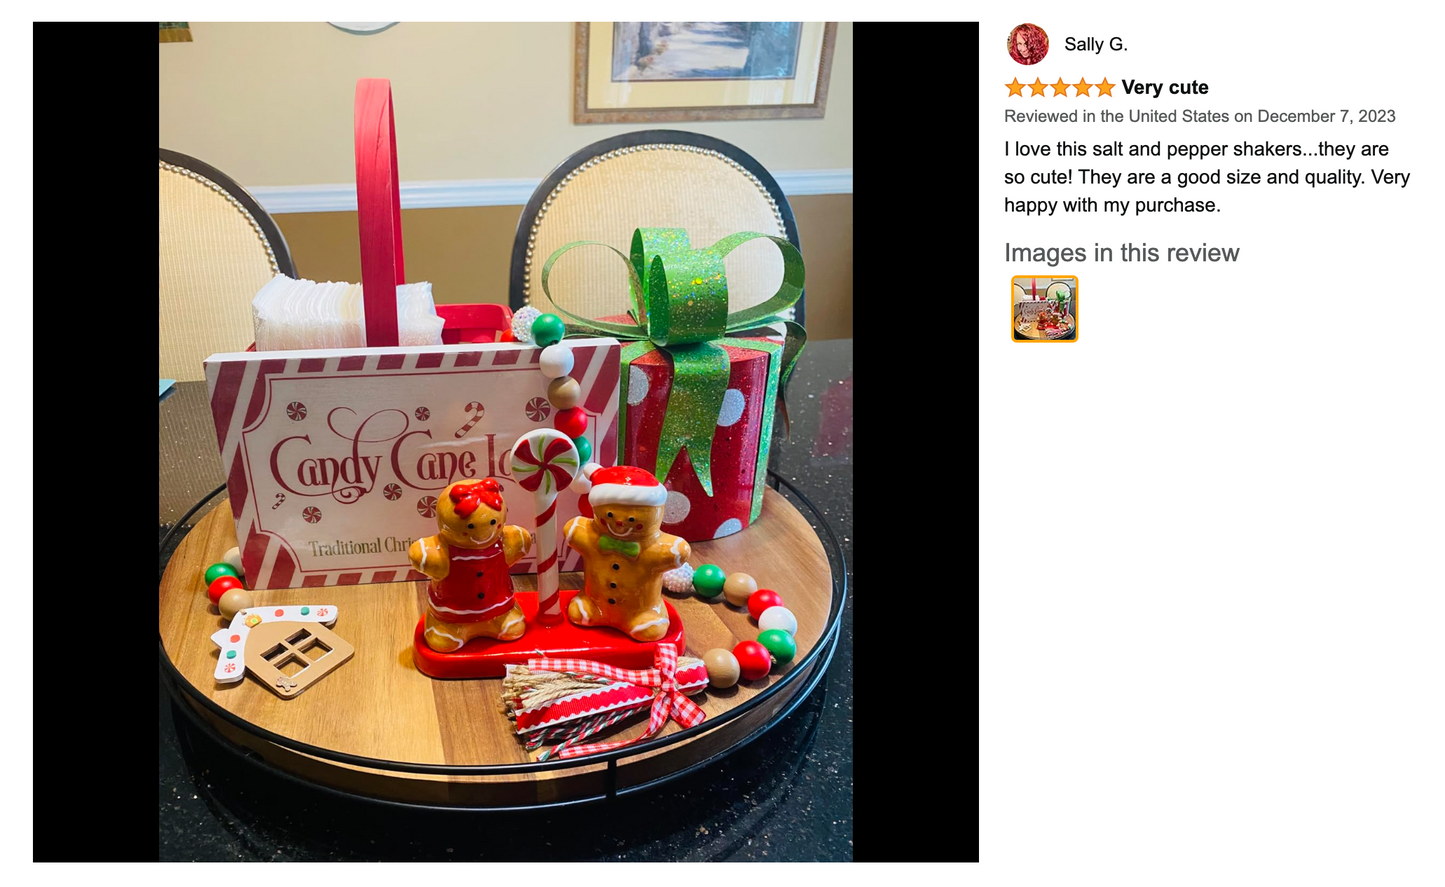 Gift Boxed Gingerbread Figurine Salt and Pepper Shaker Set